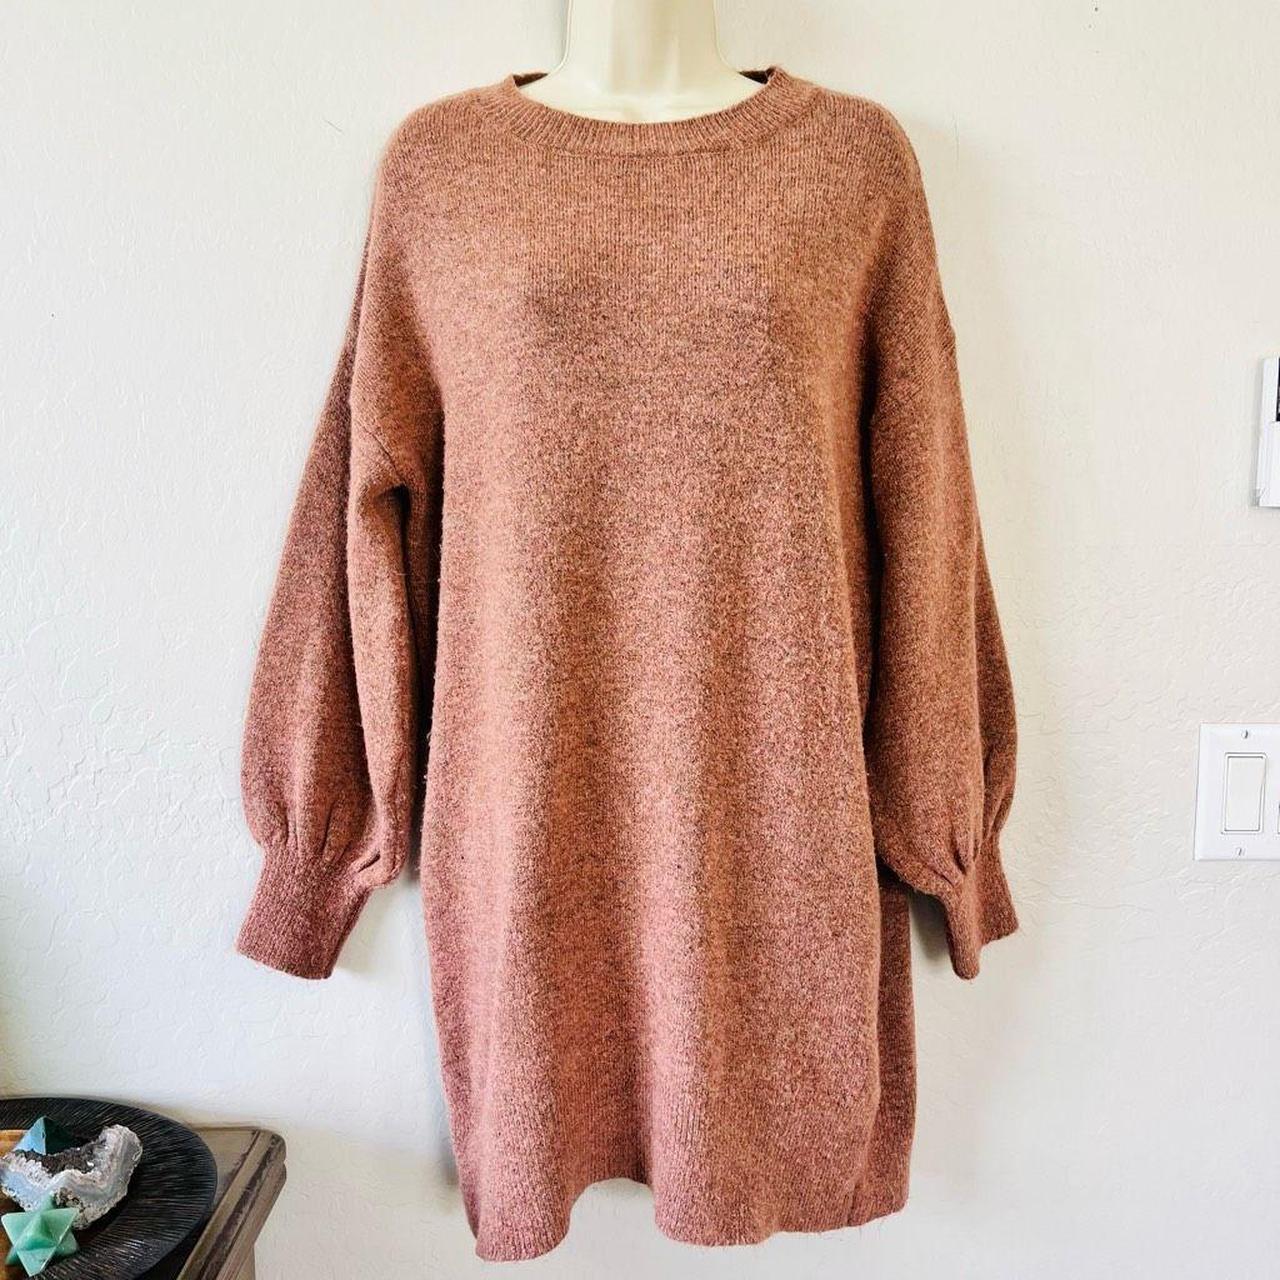 Topshop Oversize Sweater Dress